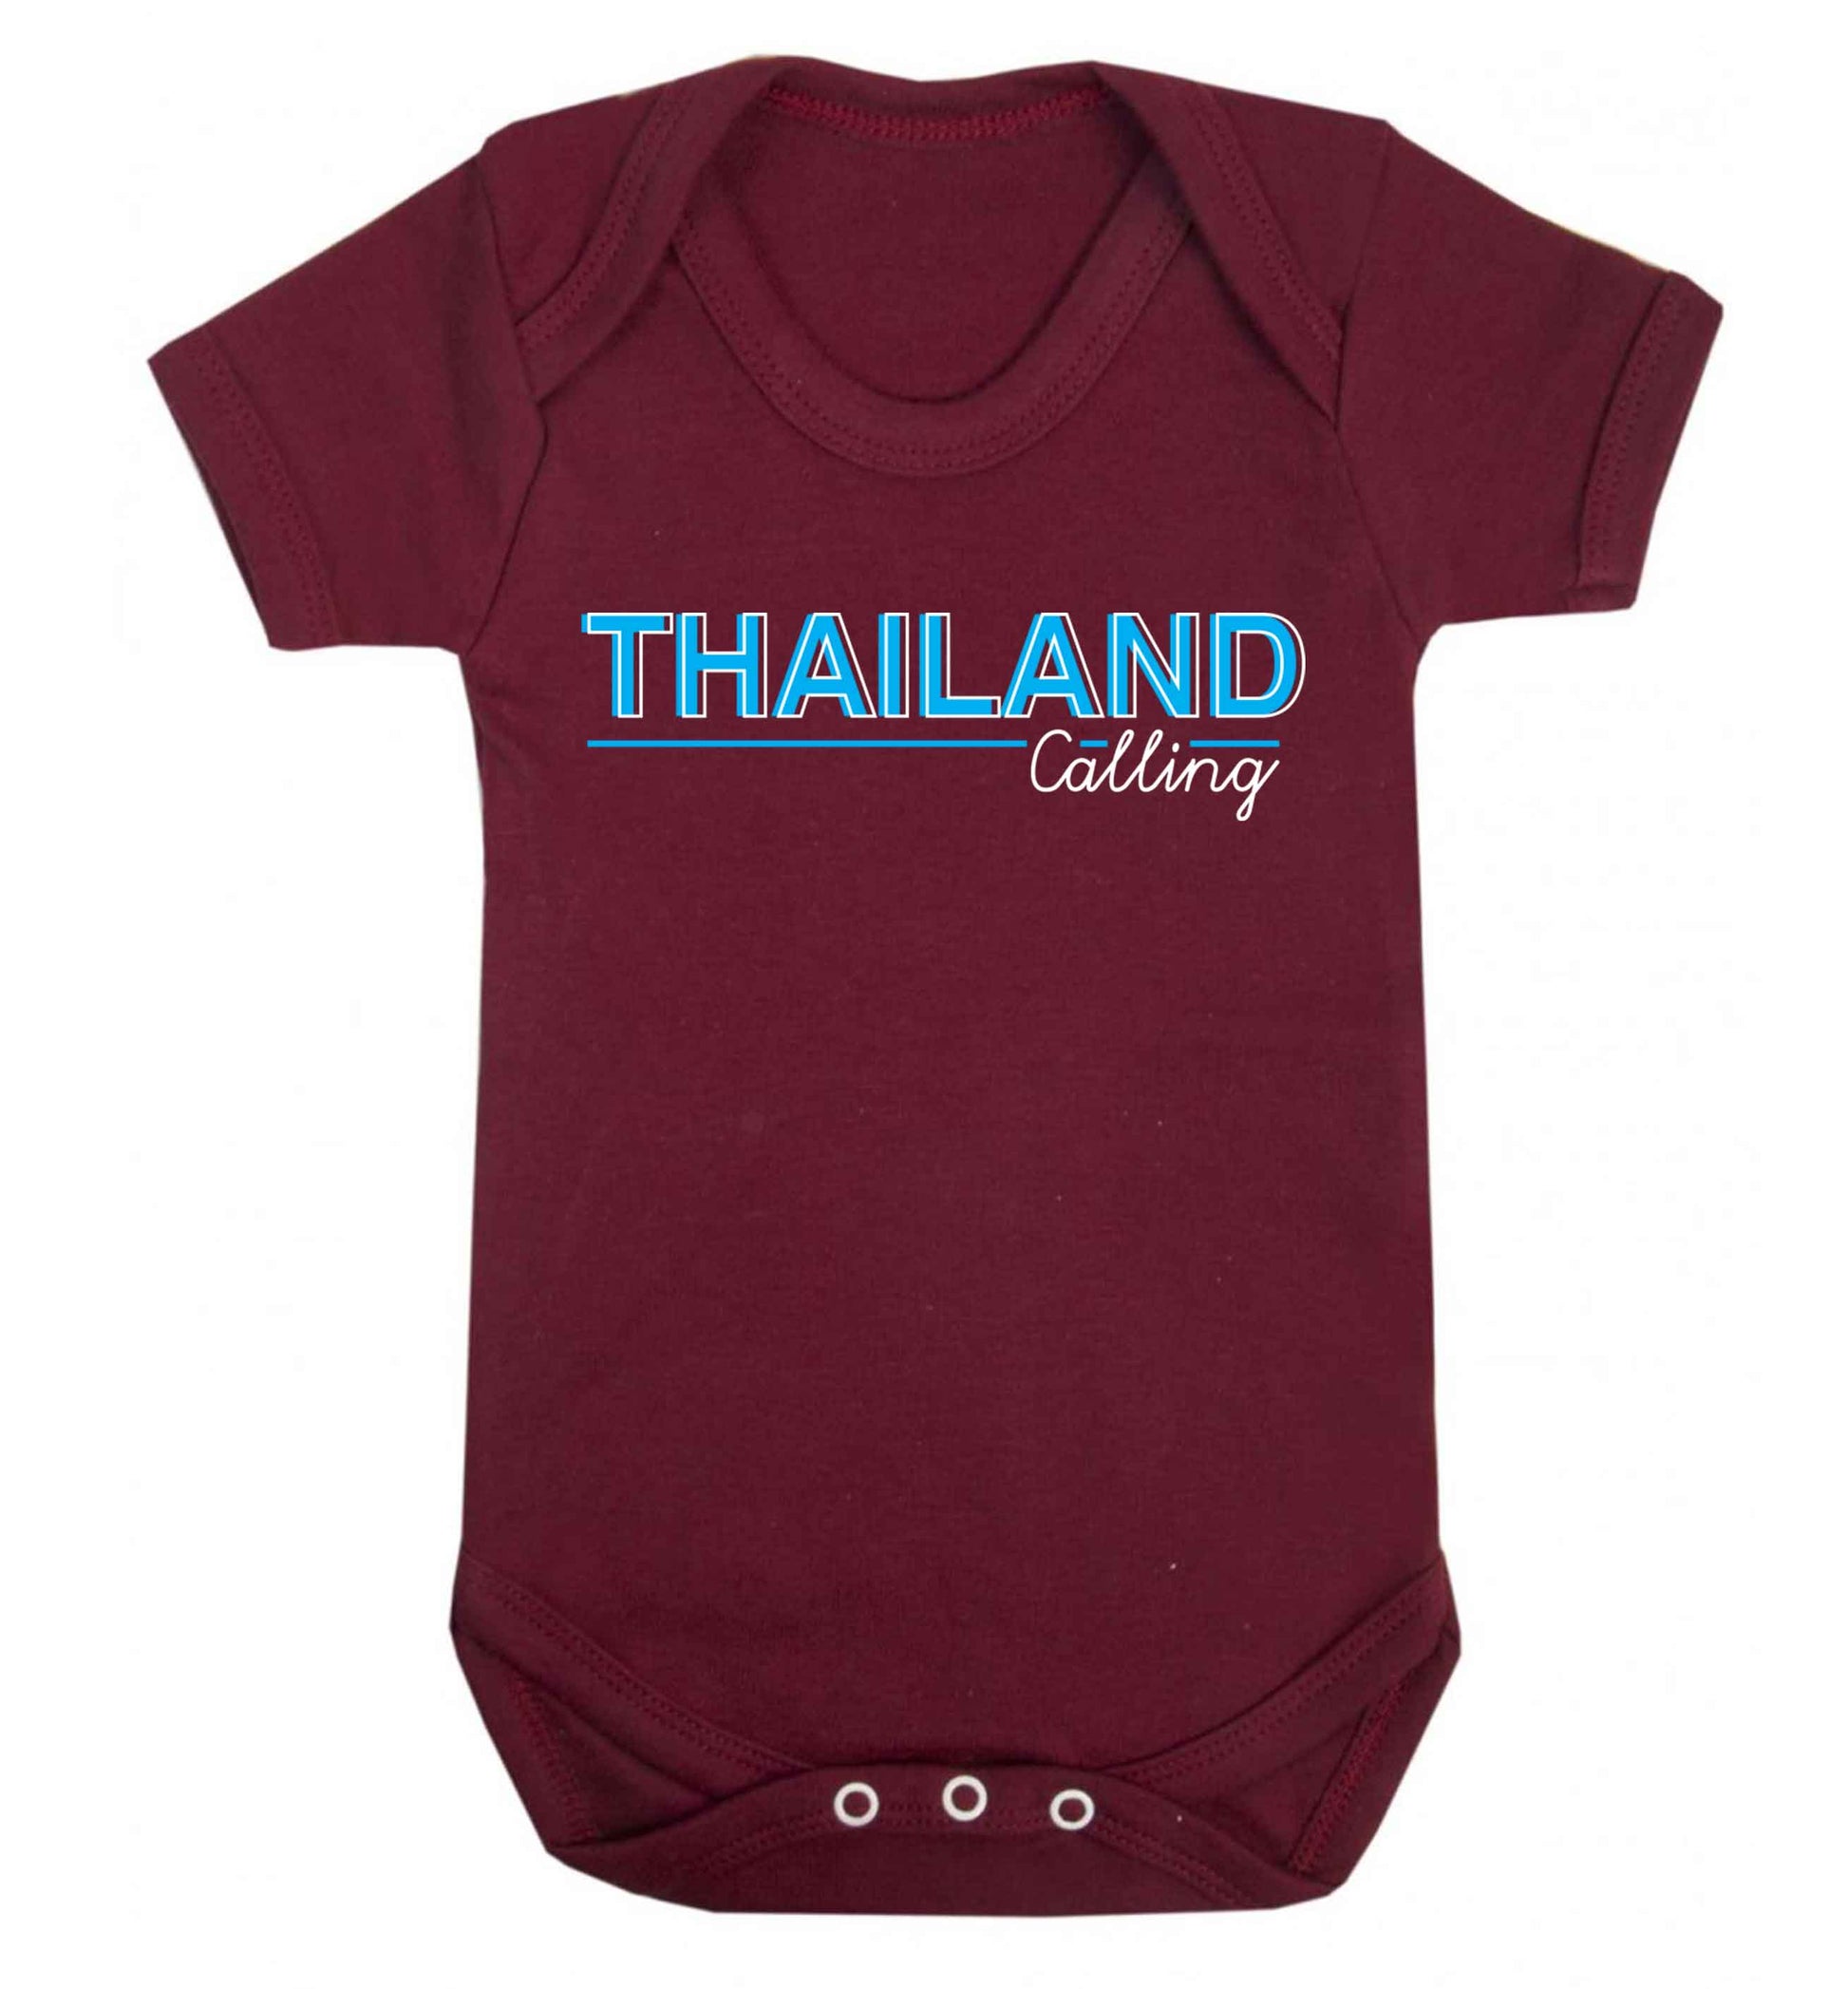 Thailand calling Baby Vest maroon 18-24 months